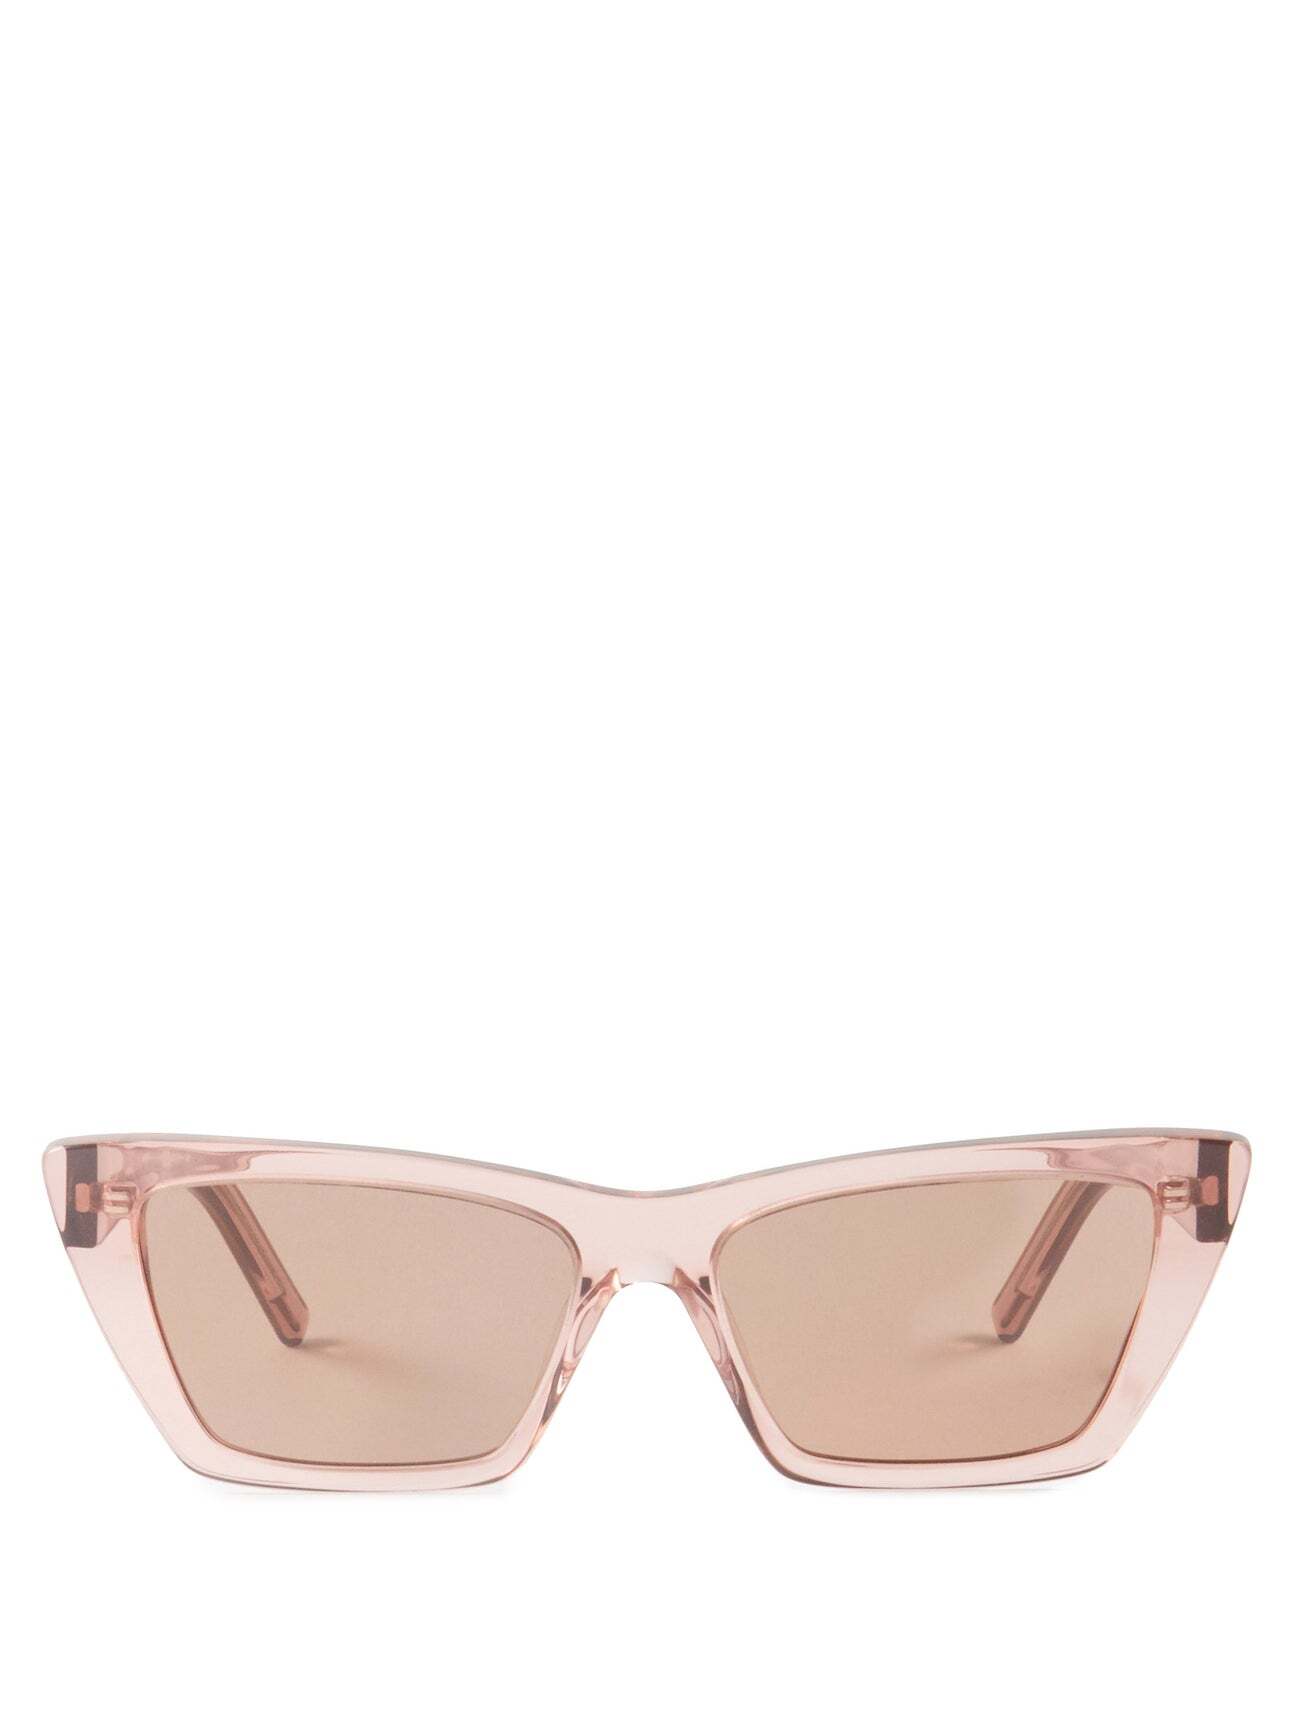 Saint Laurent - Mica Cat-eye Acetate Sunglasses - Womens - Pink